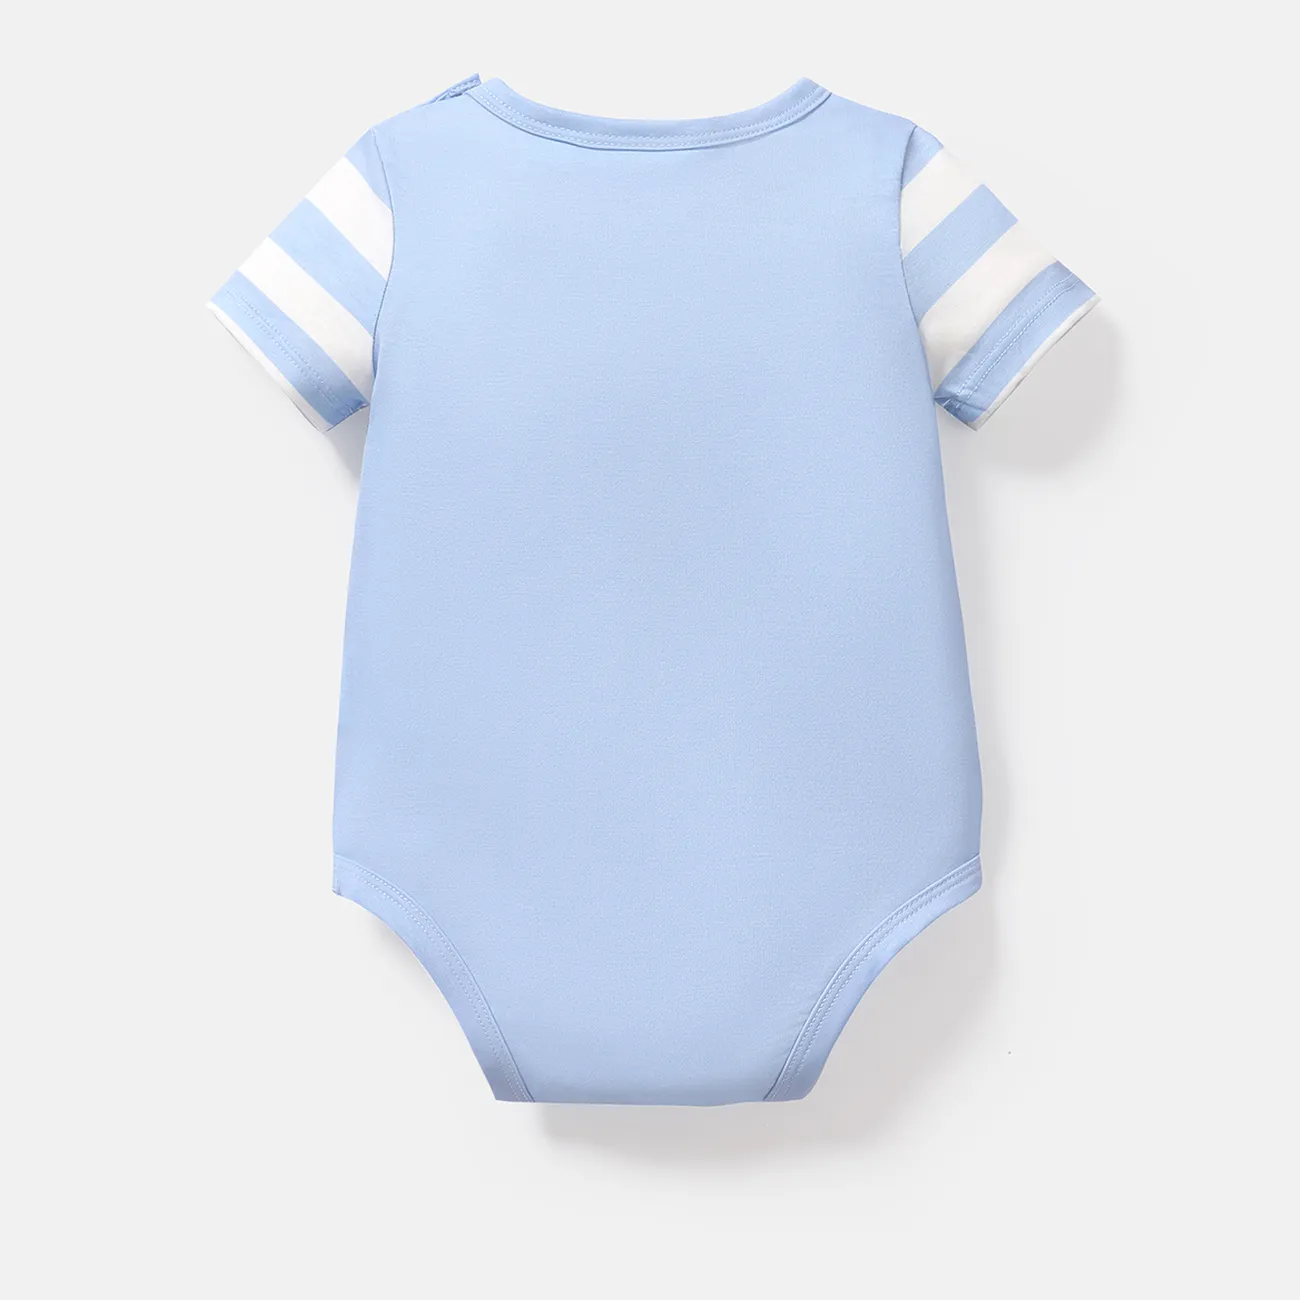 Glücksbärchis Baby Unisex Bär Kindlich Kurzärmelig Strampler hellblau big image 1